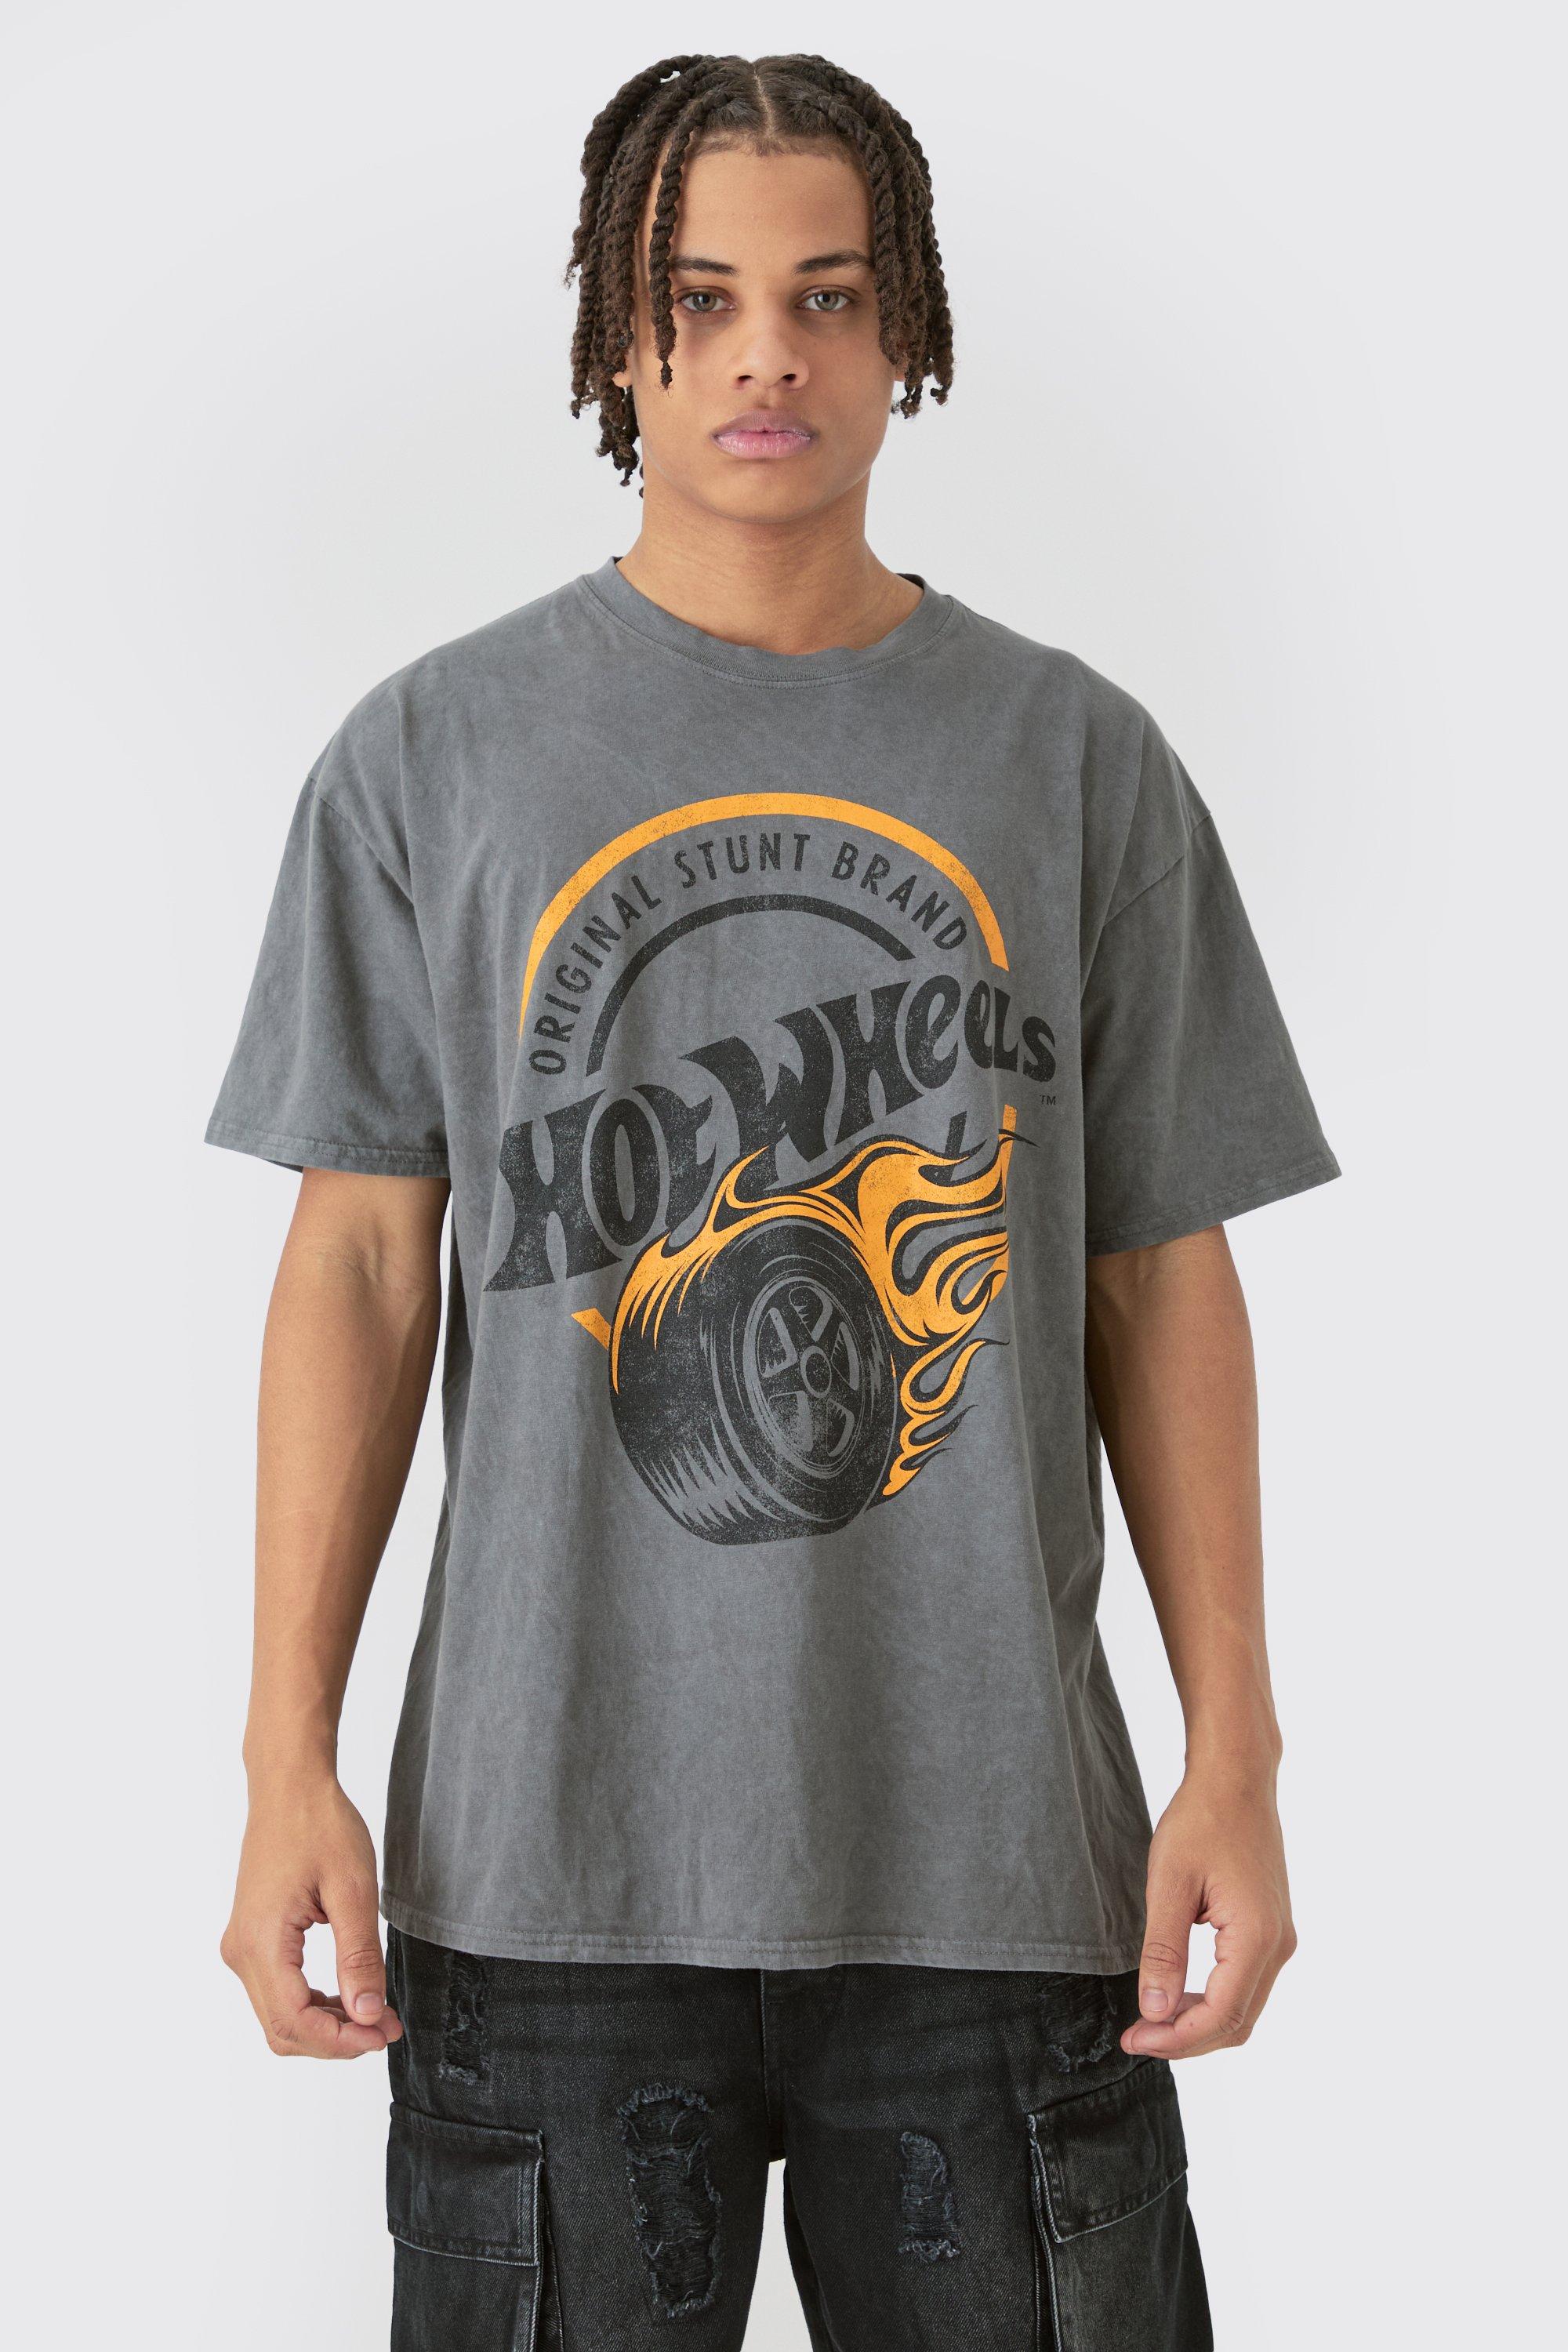 Image of Oversized Hotwheels Wash License T-shirt, Grigio